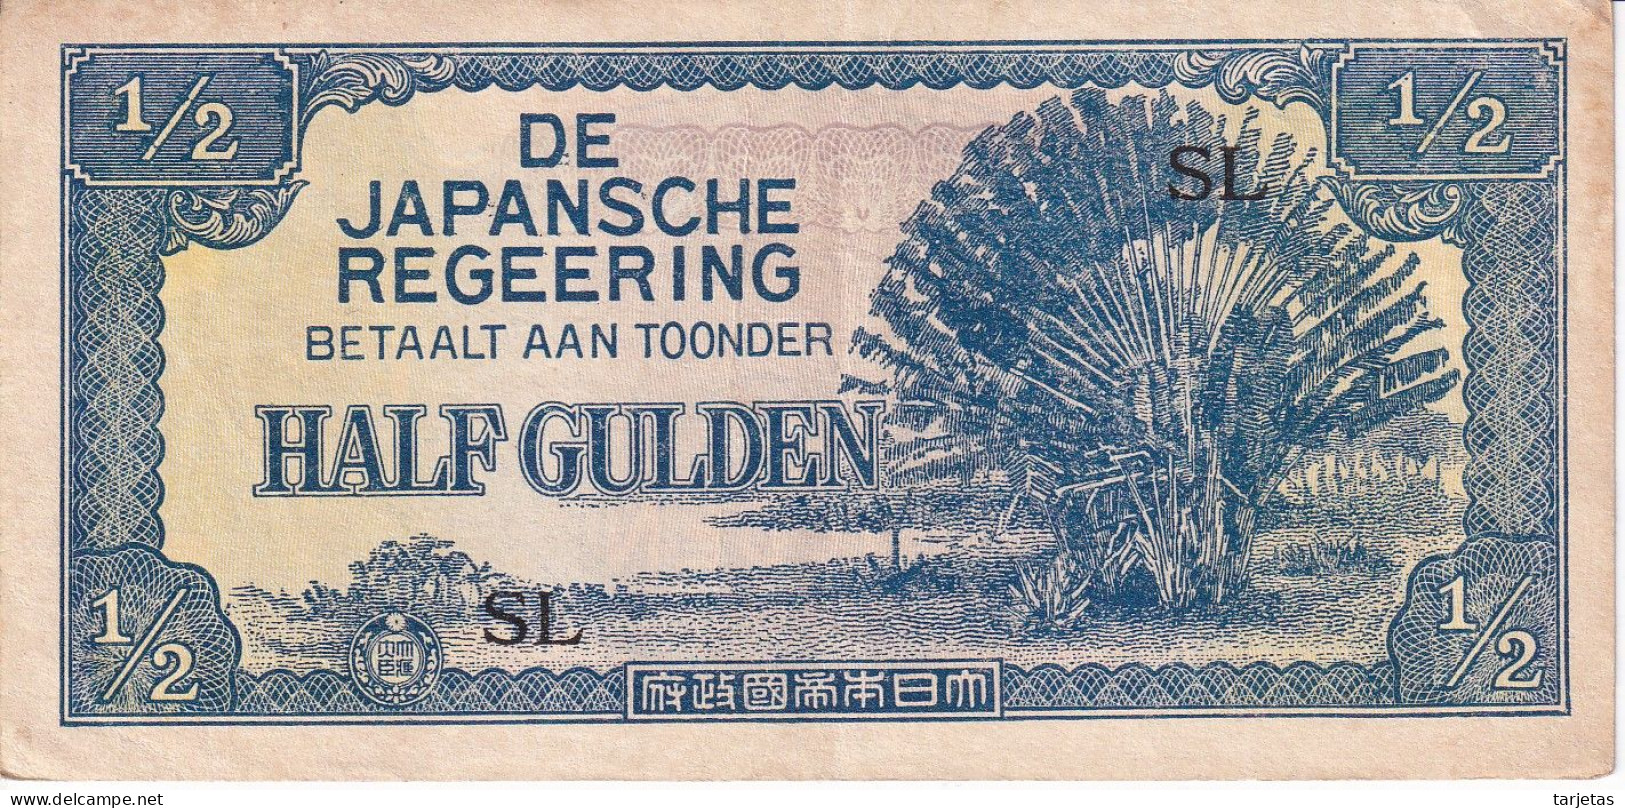 BILLETE DE JAPANSCHE REGEERING DE 1/2 GULDEN DEL AÑO 1942  (BANKNOTE) - Nederlands-Indië